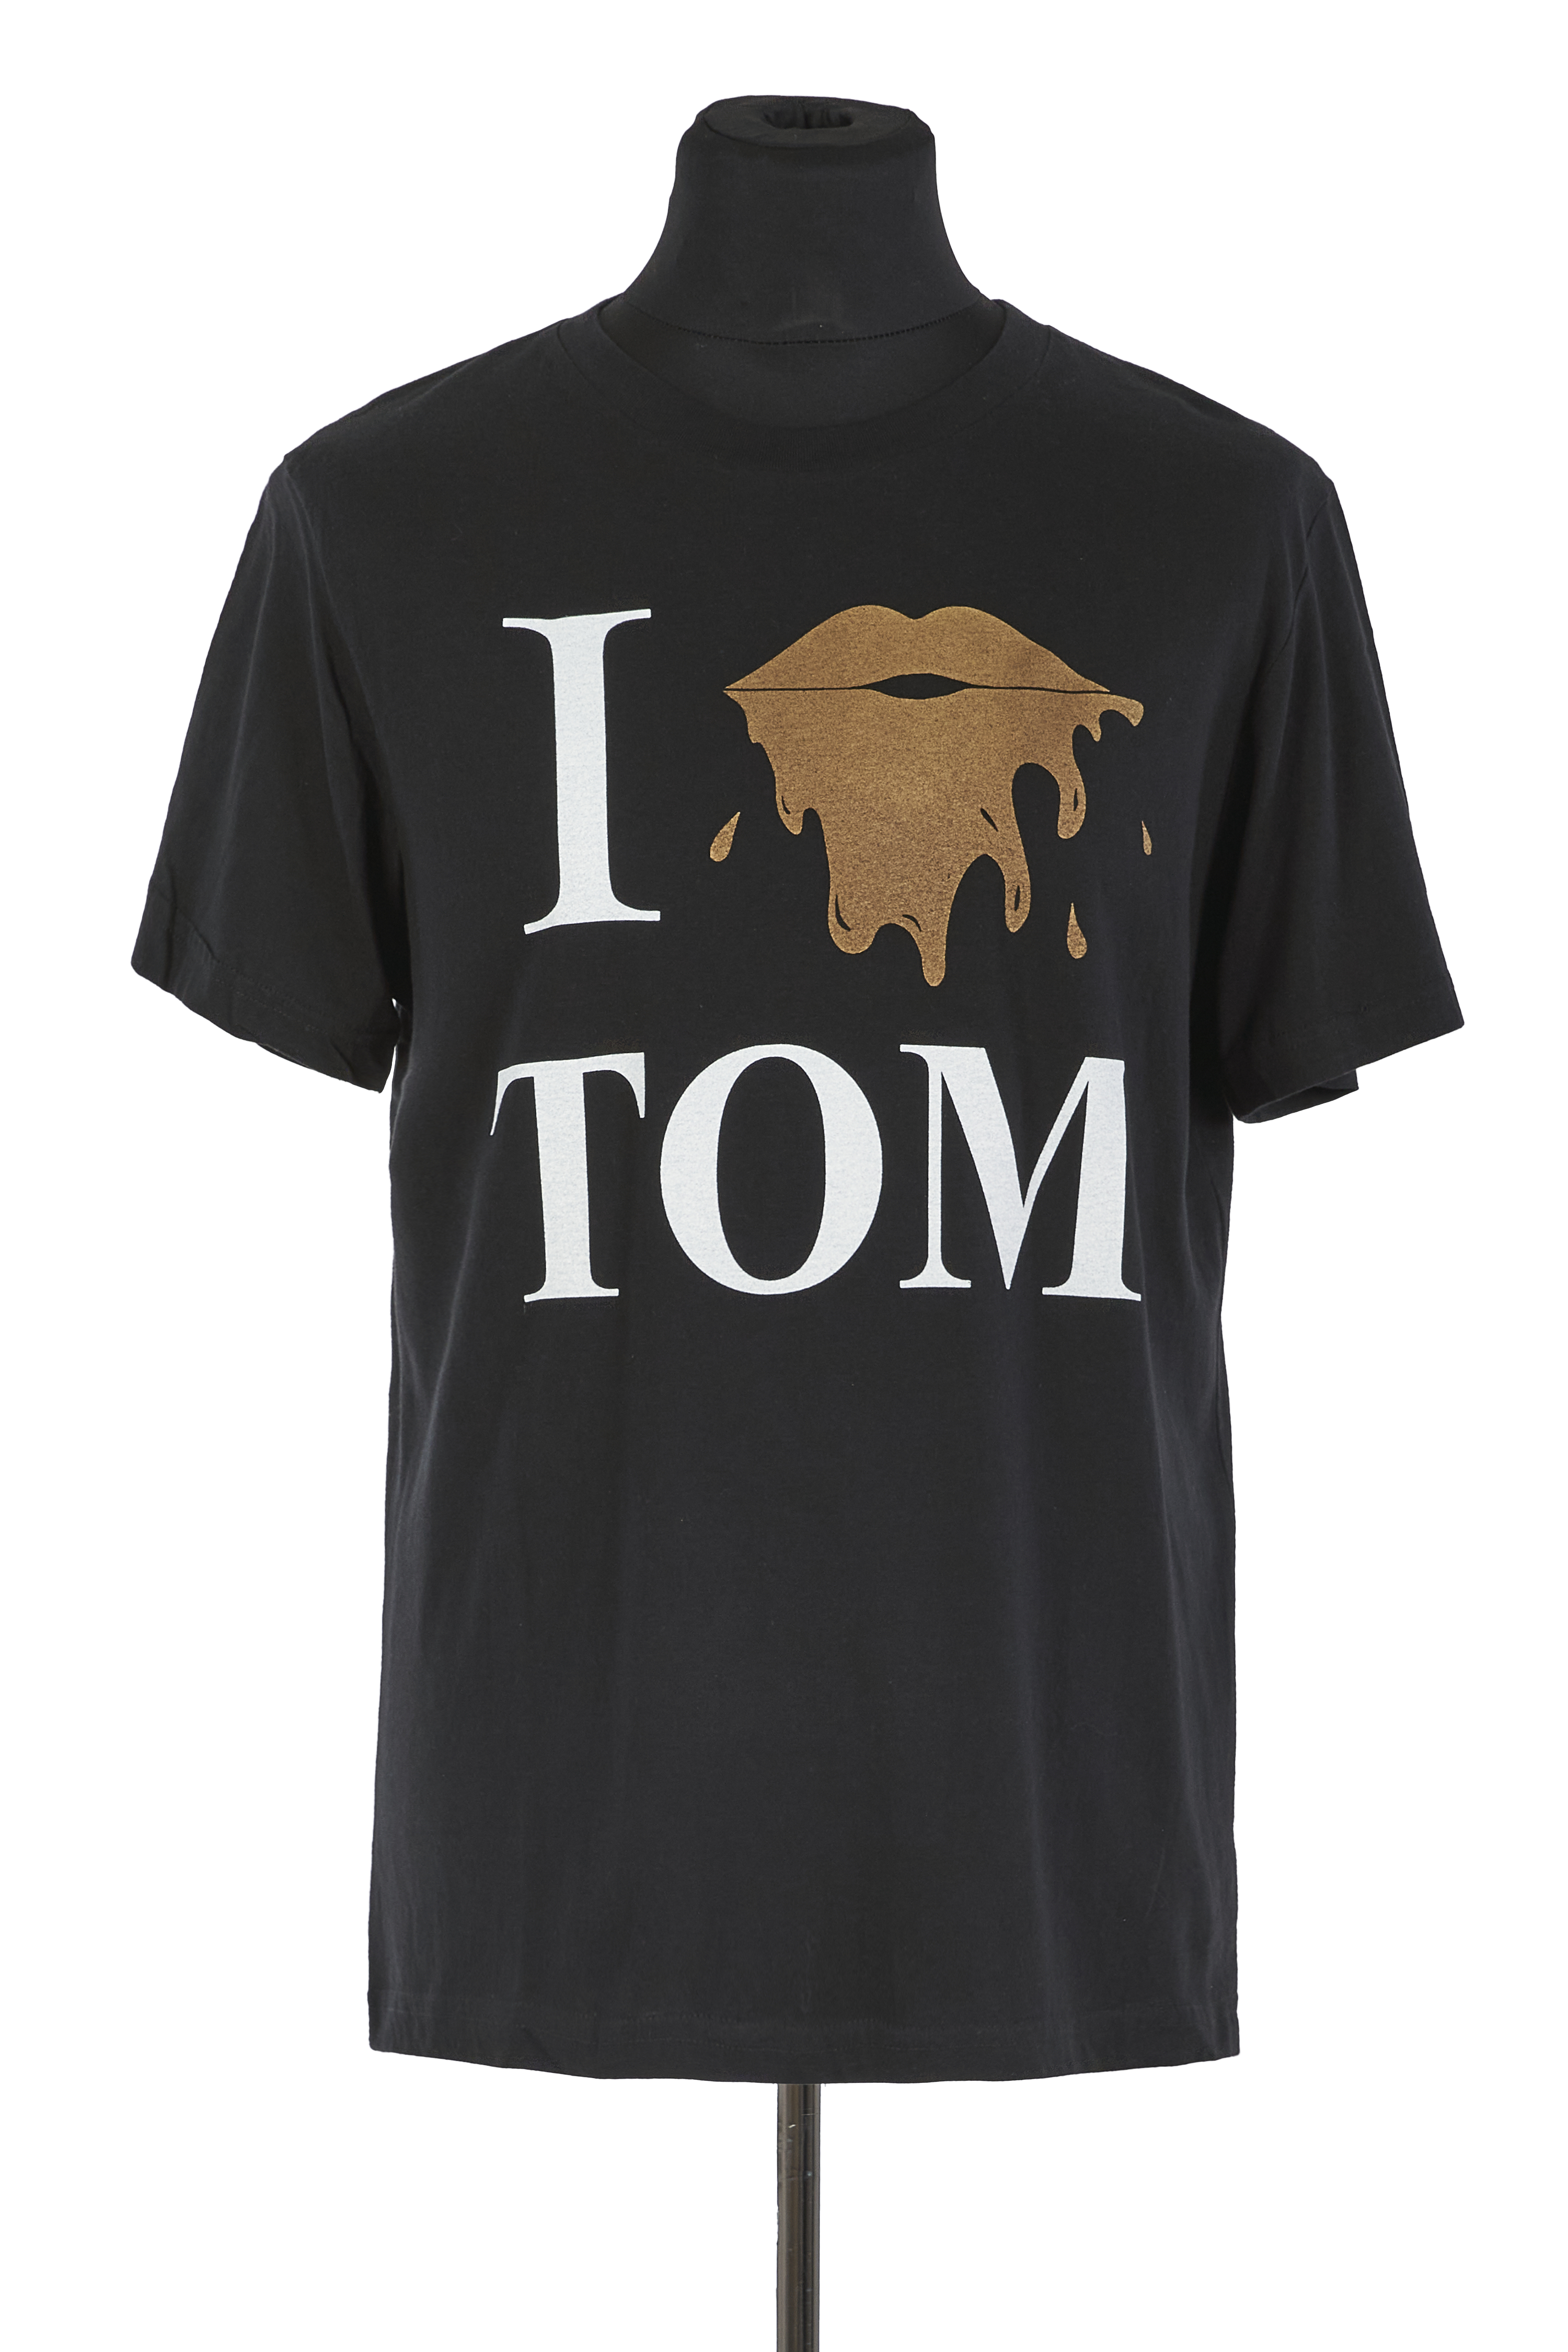 T-shirt I KISS TOM